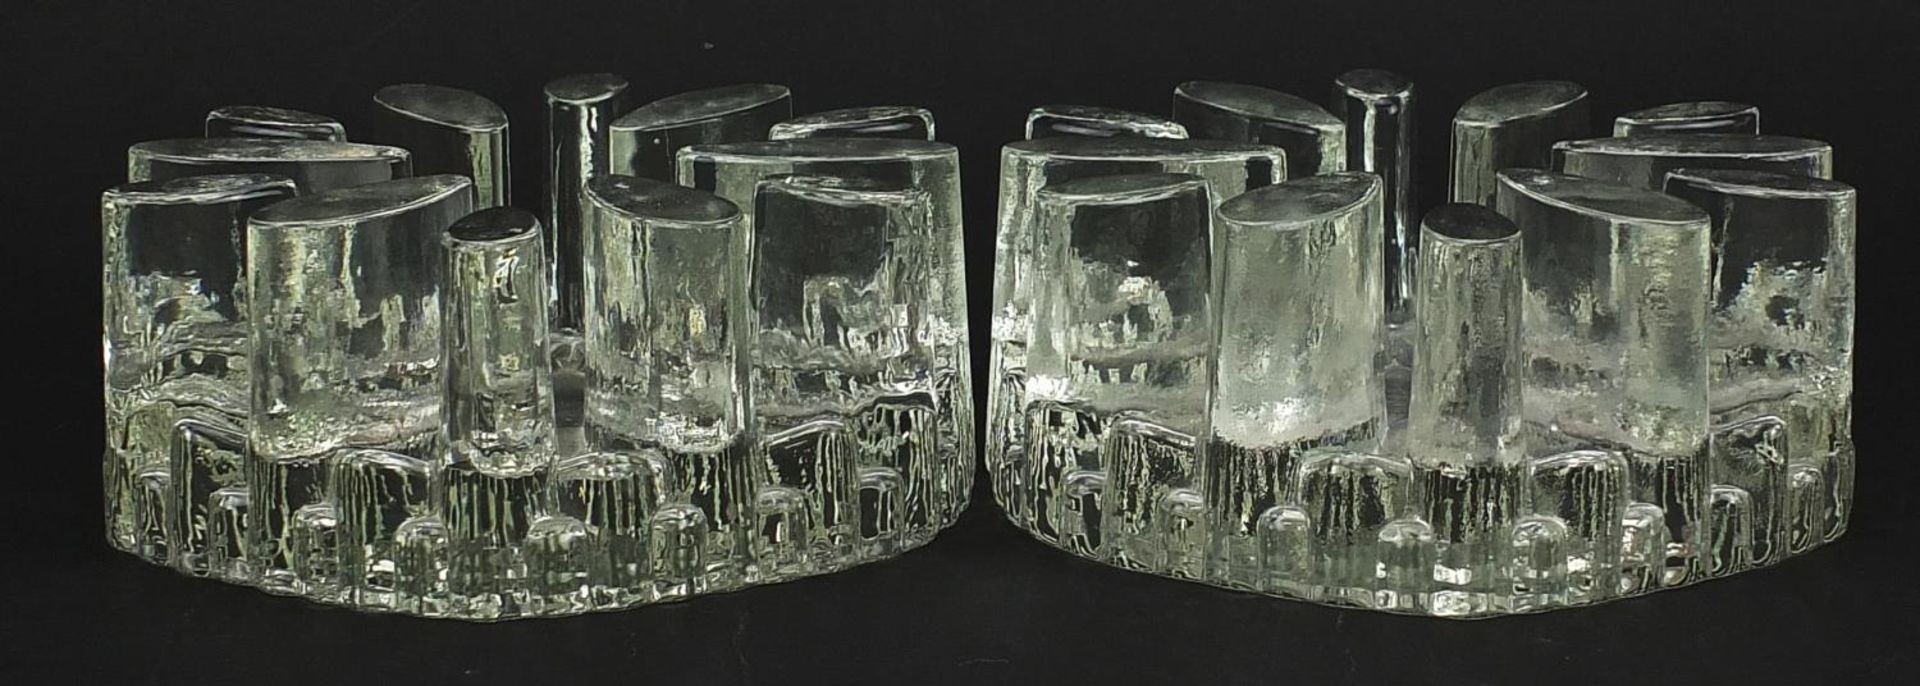 Pair of Scandinavian design candleholders, each 15.5cm in diameter - Image 3 of 4